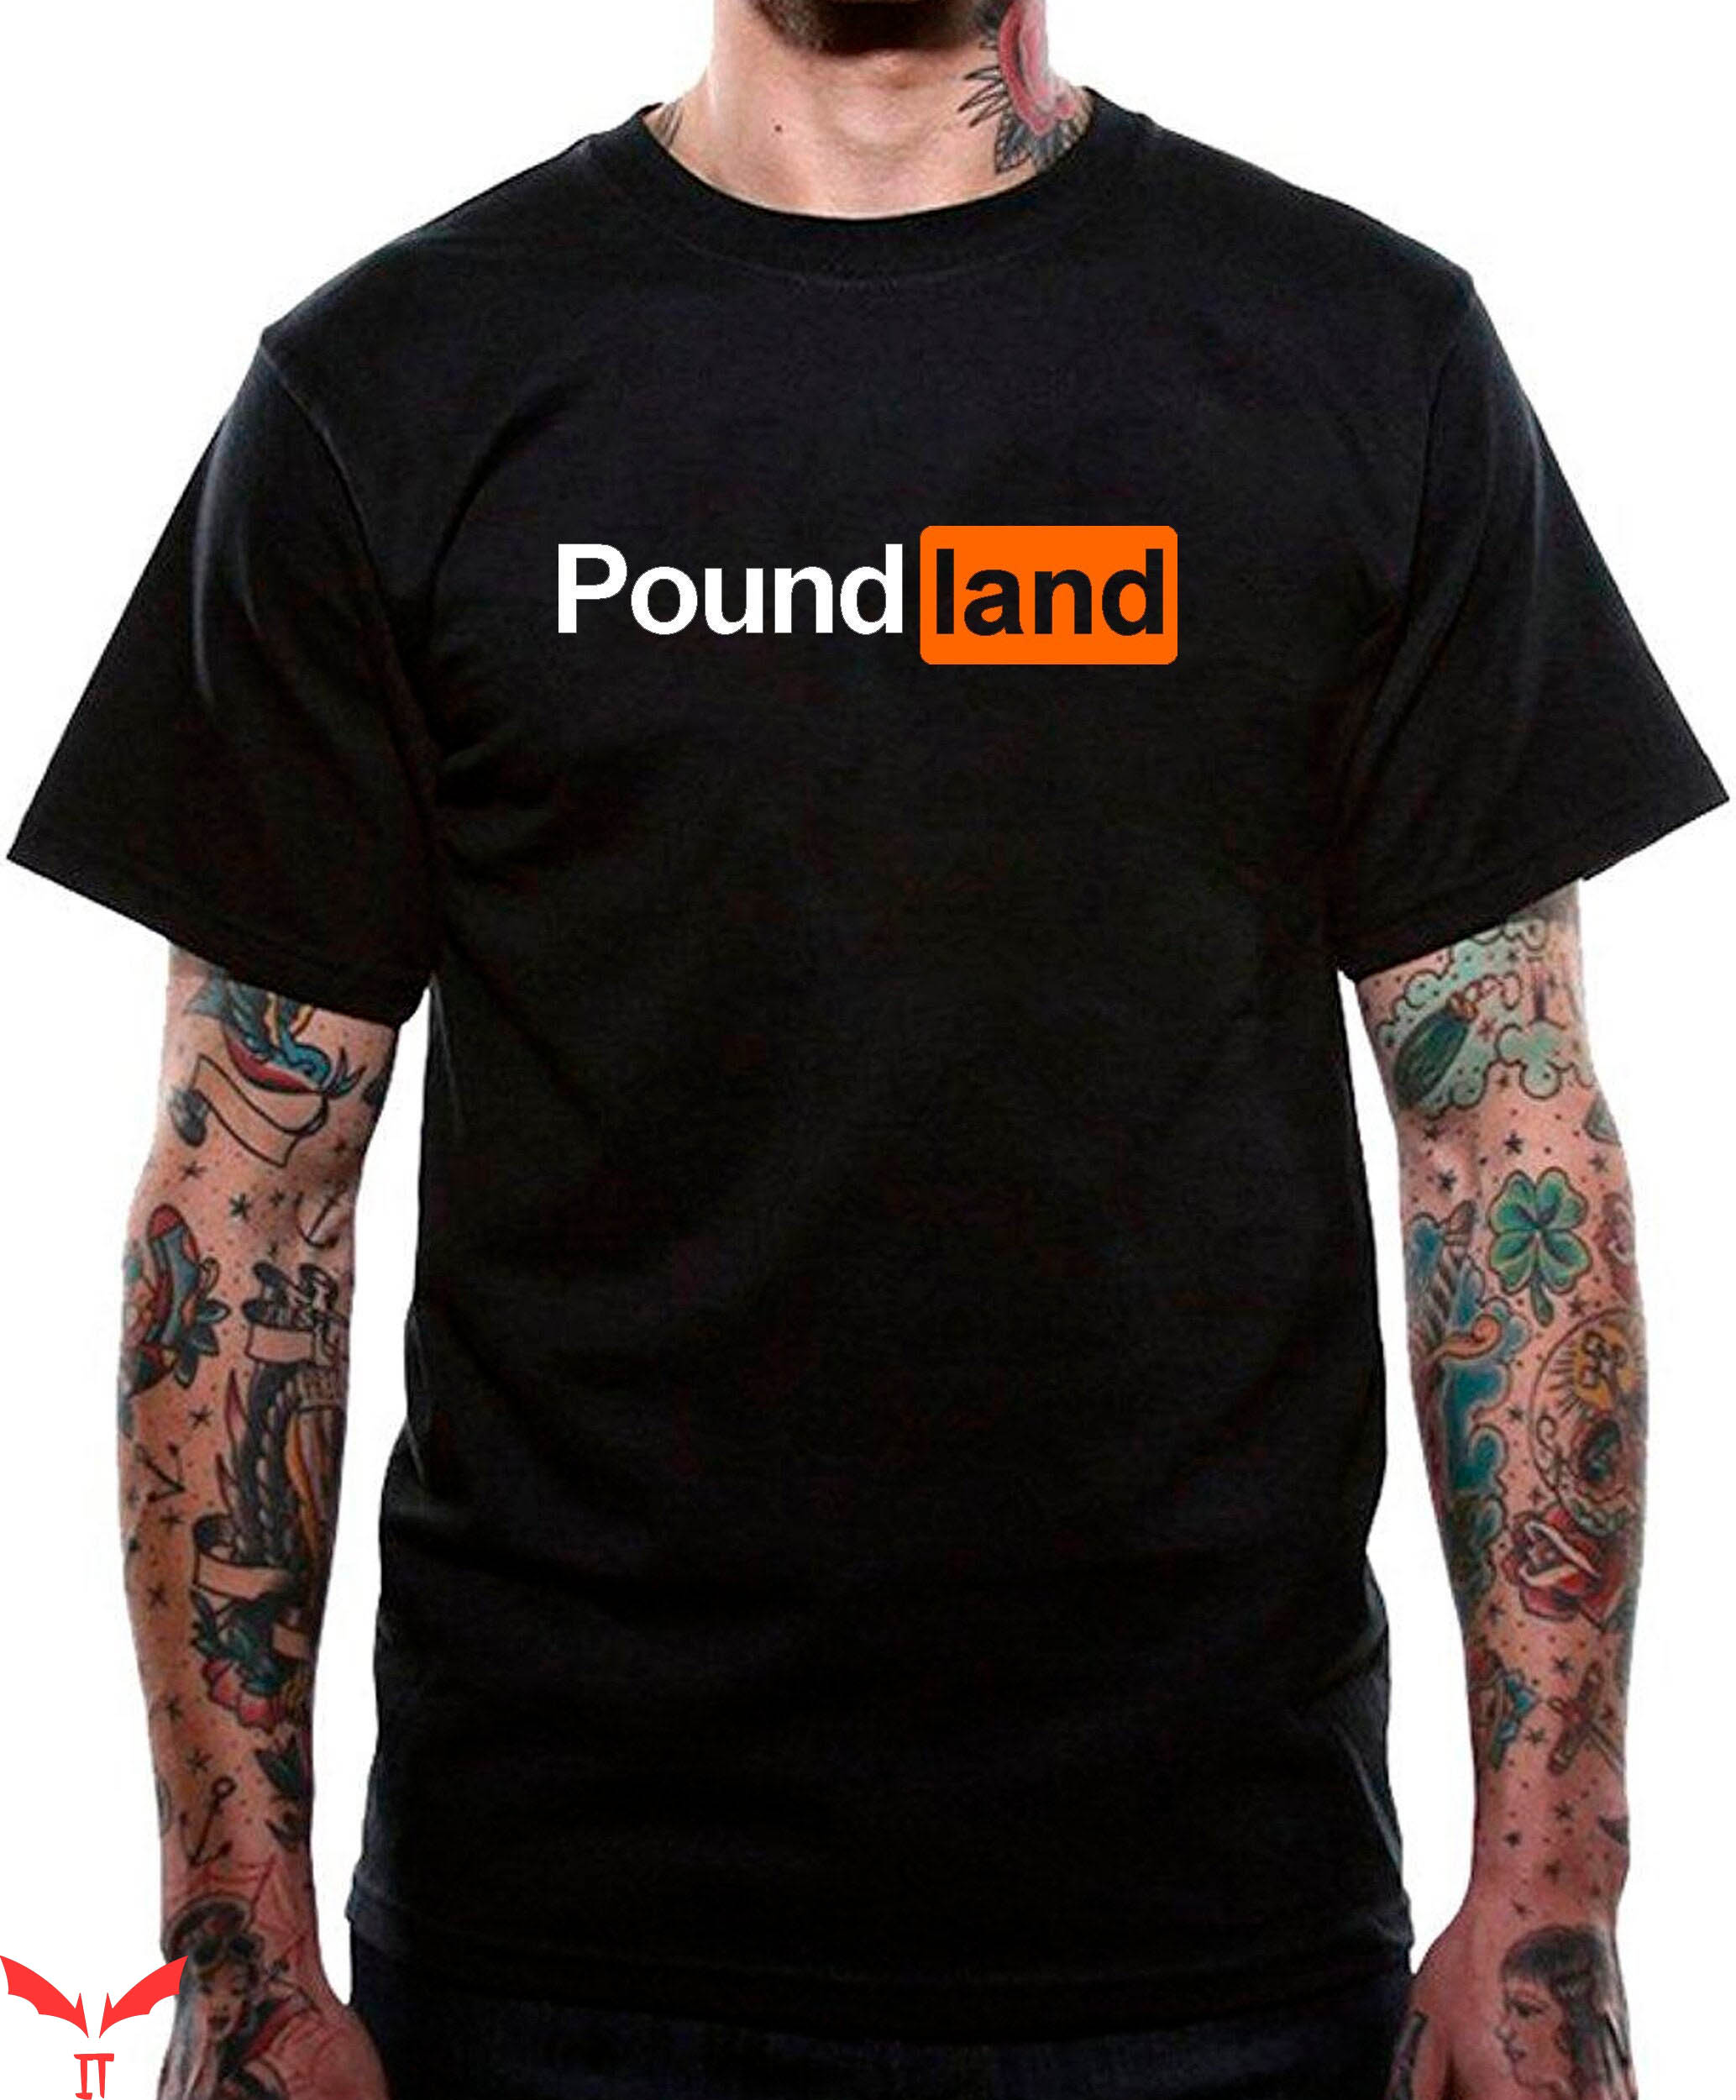 Porn Hub T-Shirt Poundland Pornhub Parody Offensive Sexual